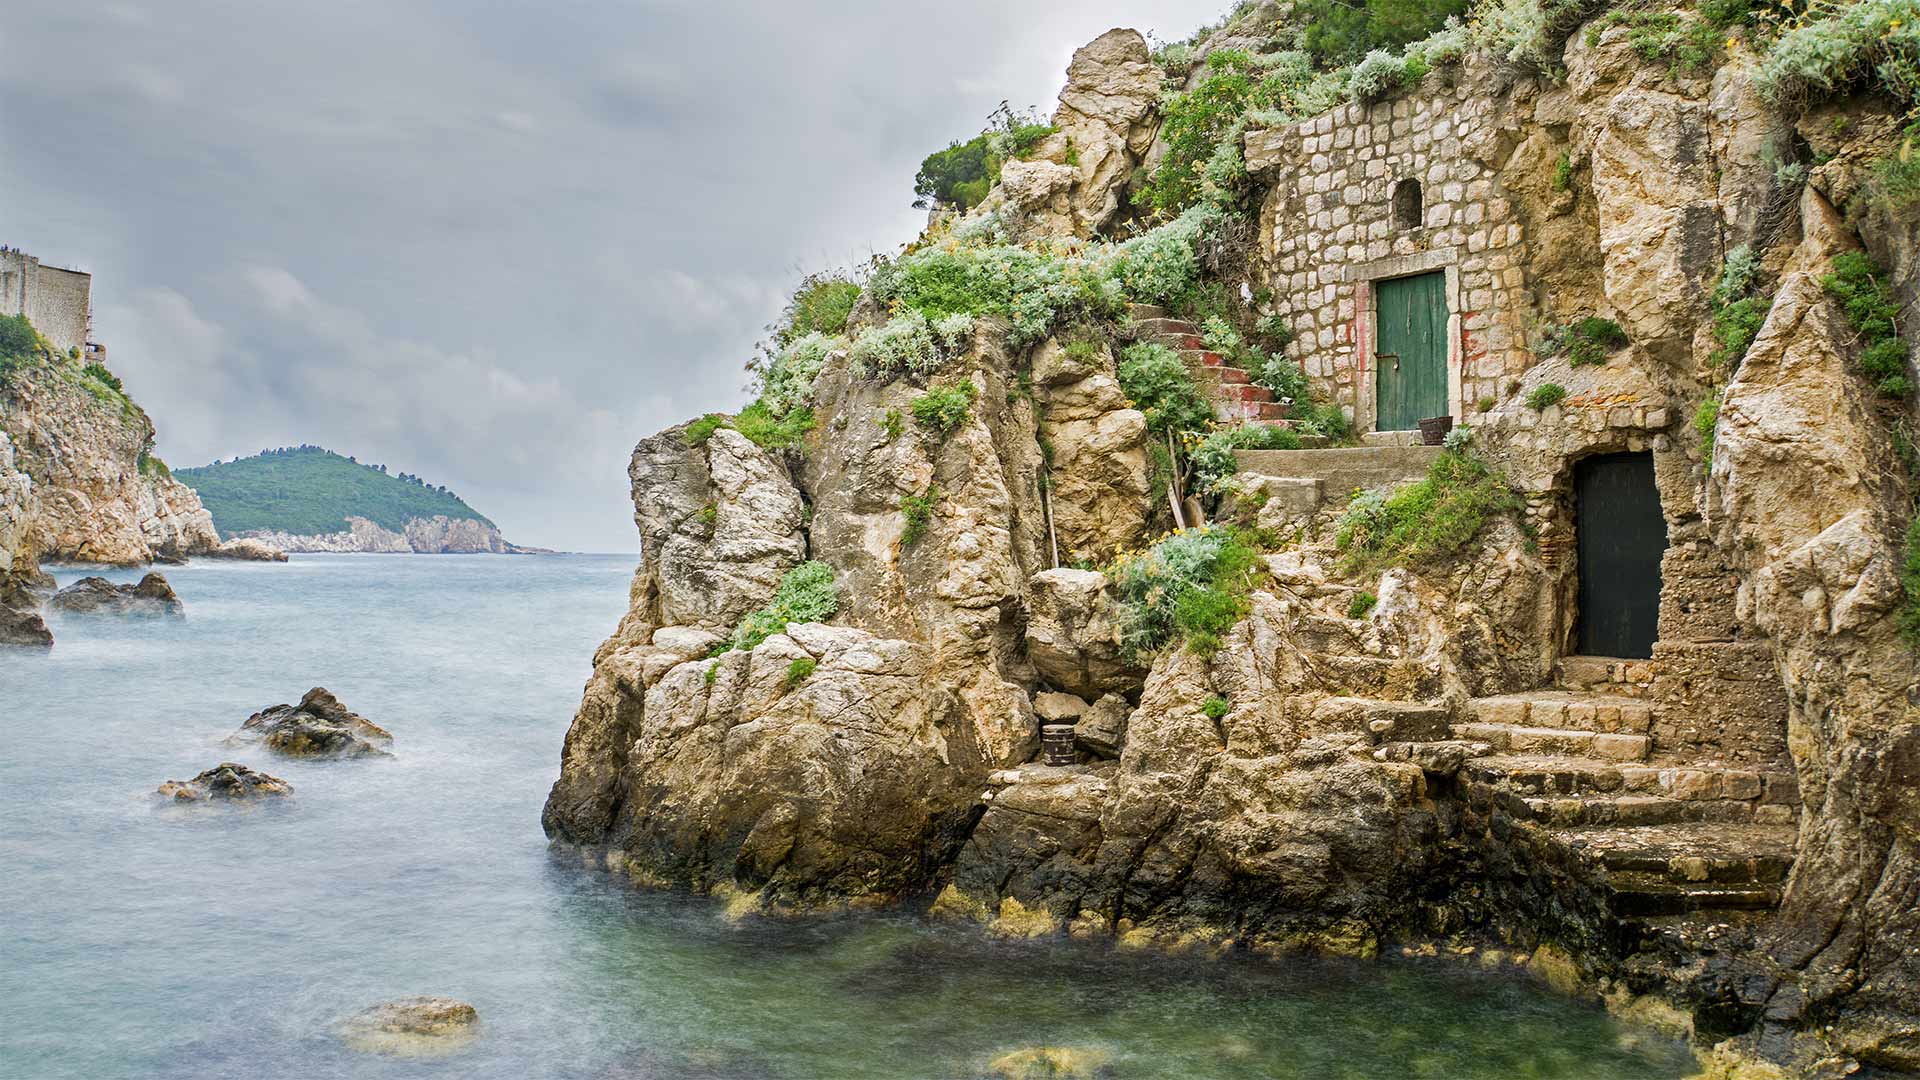 Base of Fort Lovrijenac in Kolorina Bay, Dubrovnik, Croatia - Barbara Vallance/Getty Images)